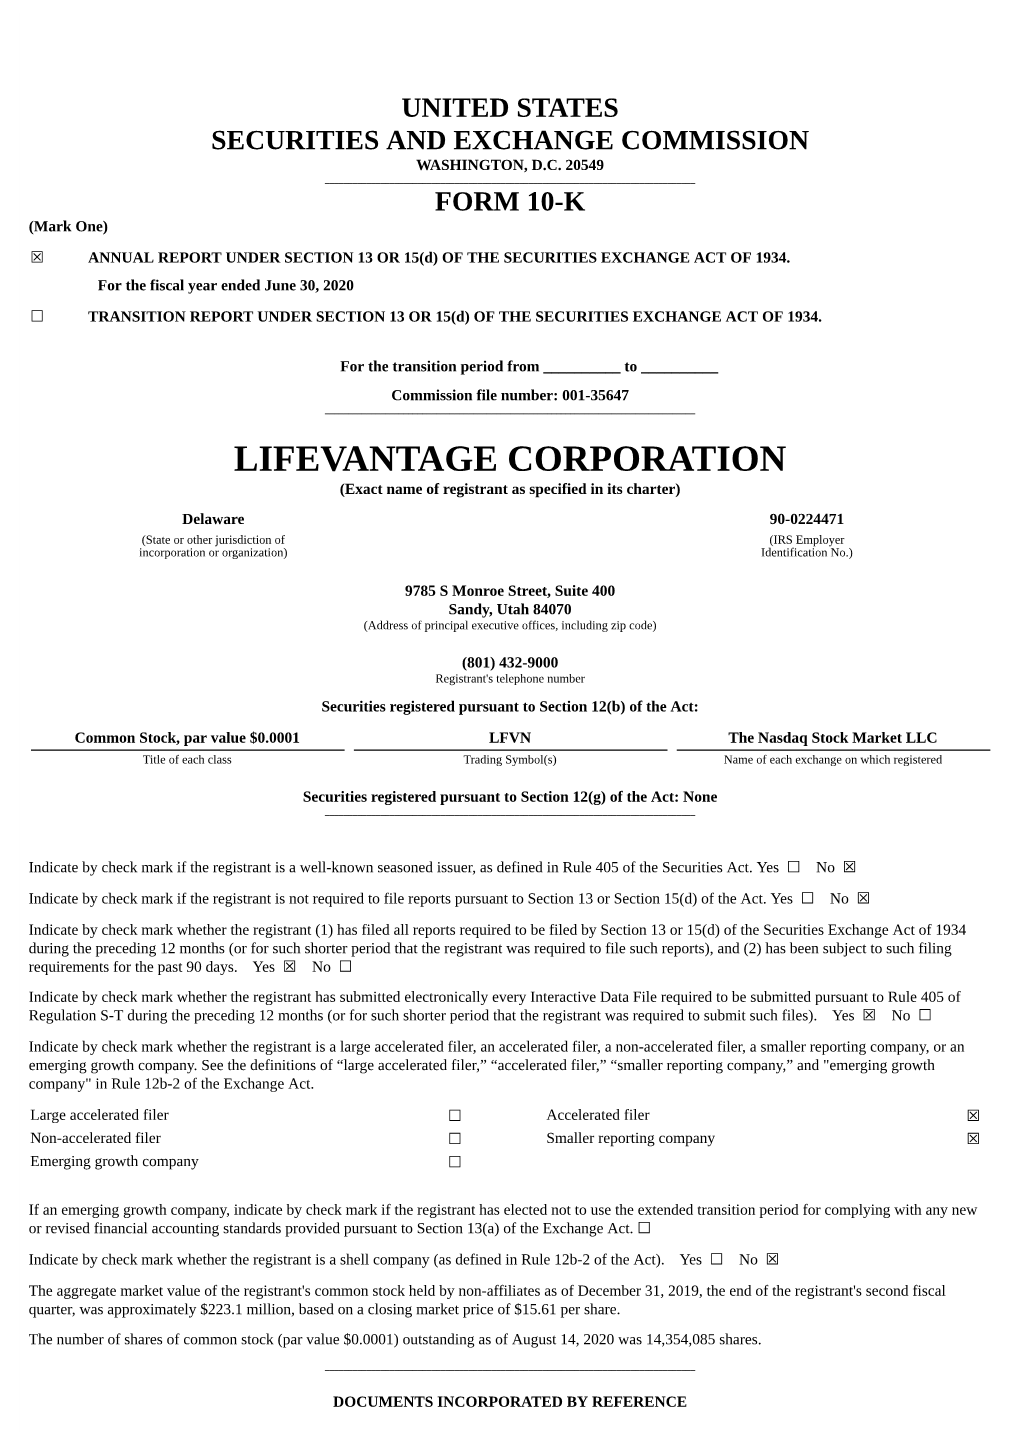 Lifevantage Corporation